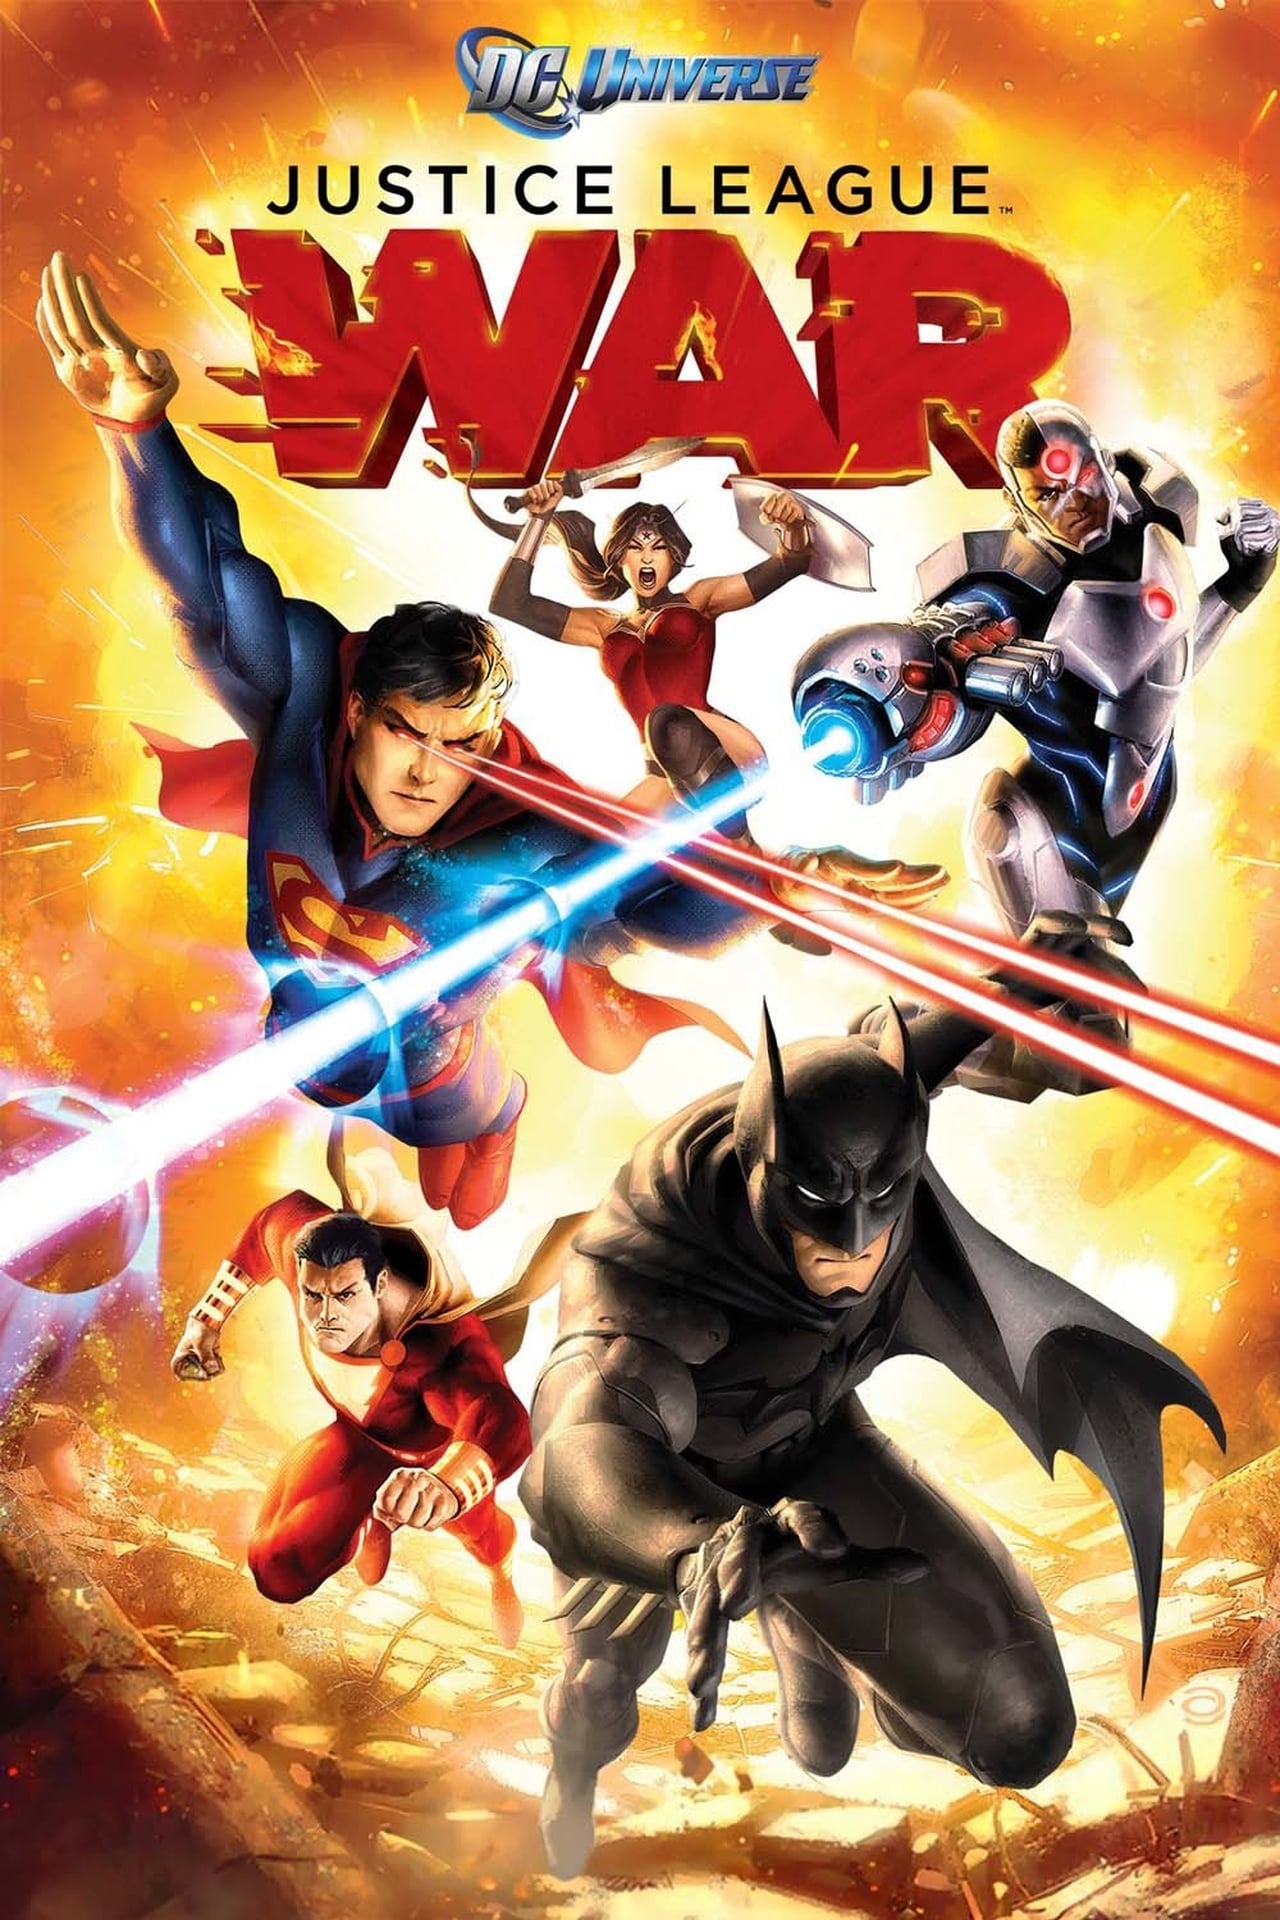 Justice League: War (Sub-ITA) (2014)